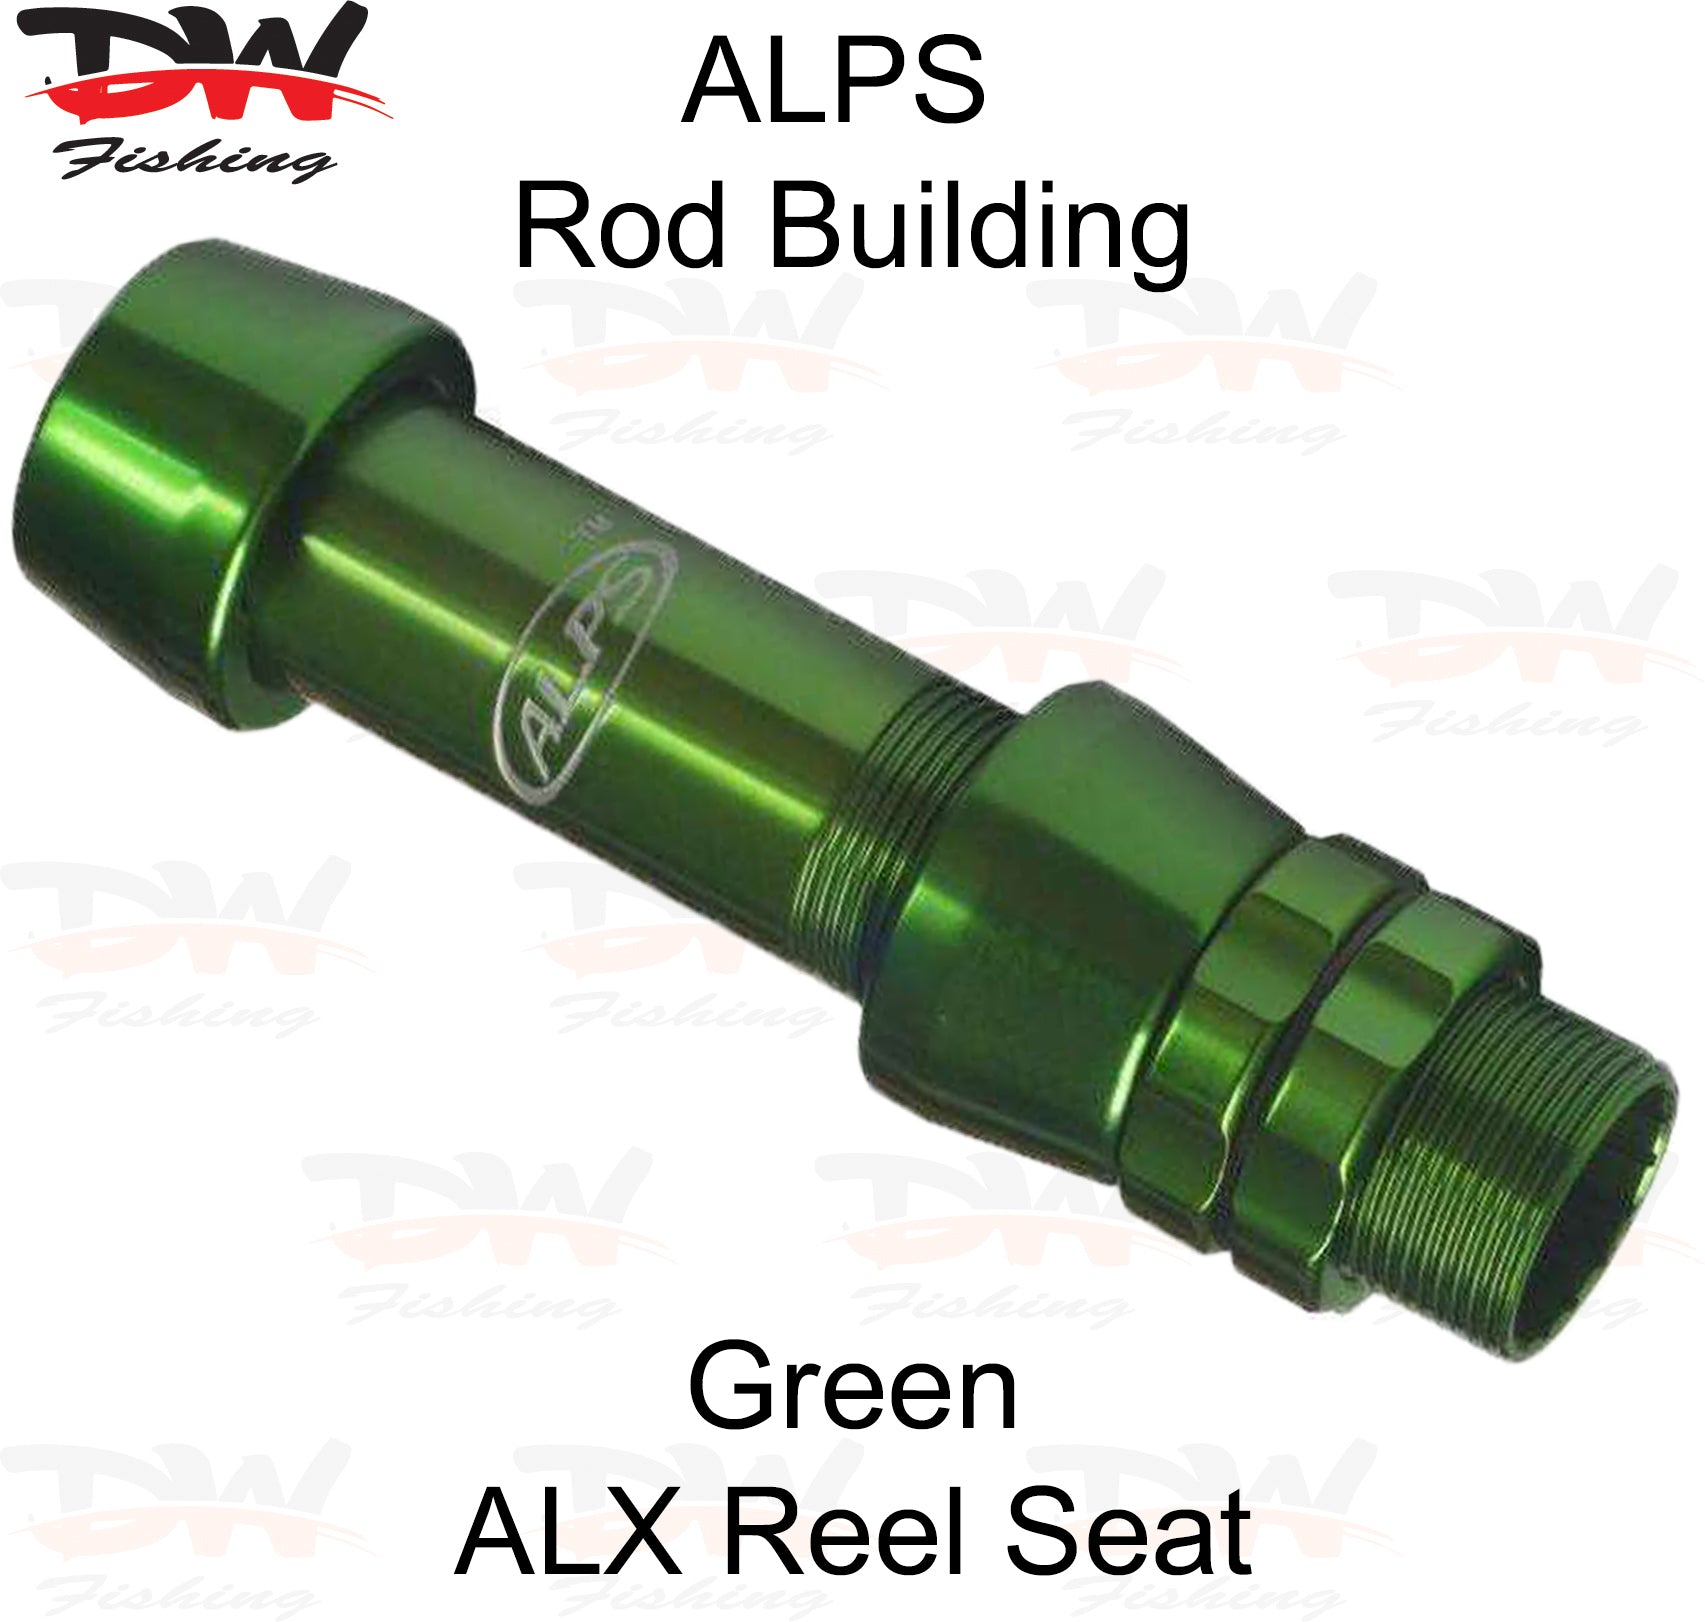 ALPS ALX Alloy Reel seat green colour salt water reel seat